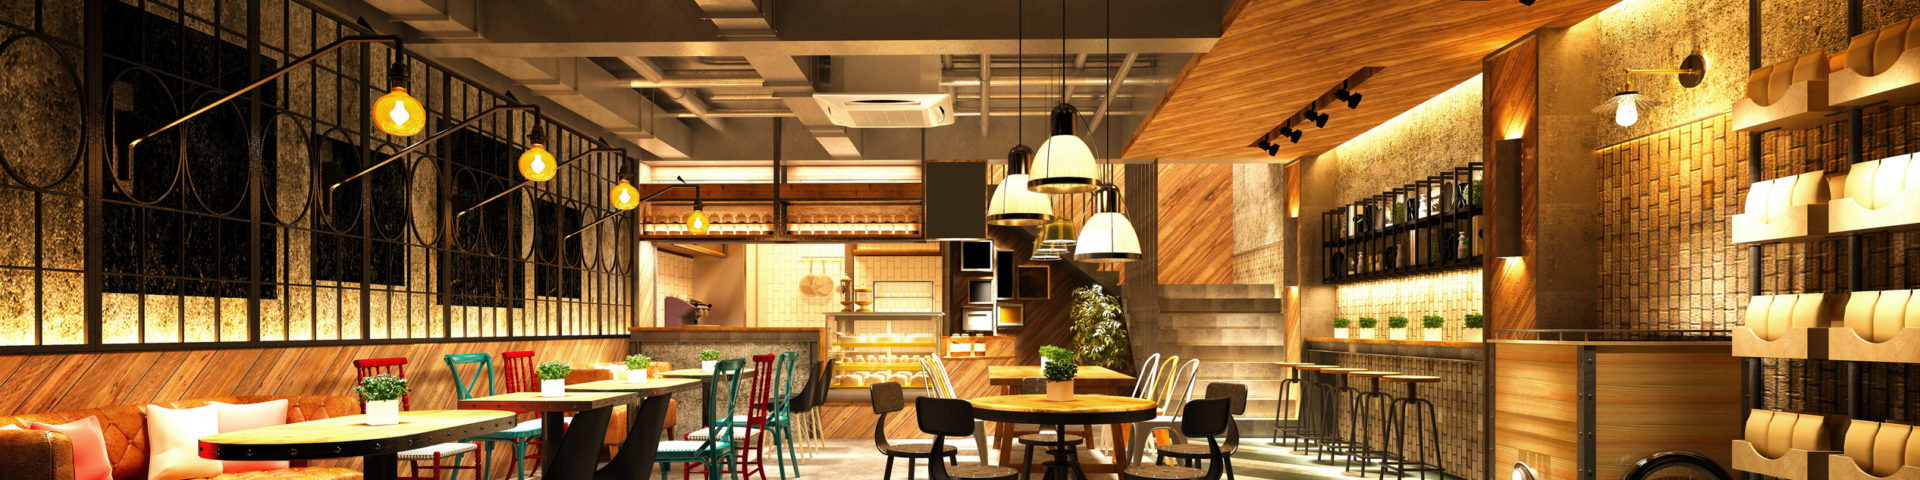 3d render wooden style restaurant cafe